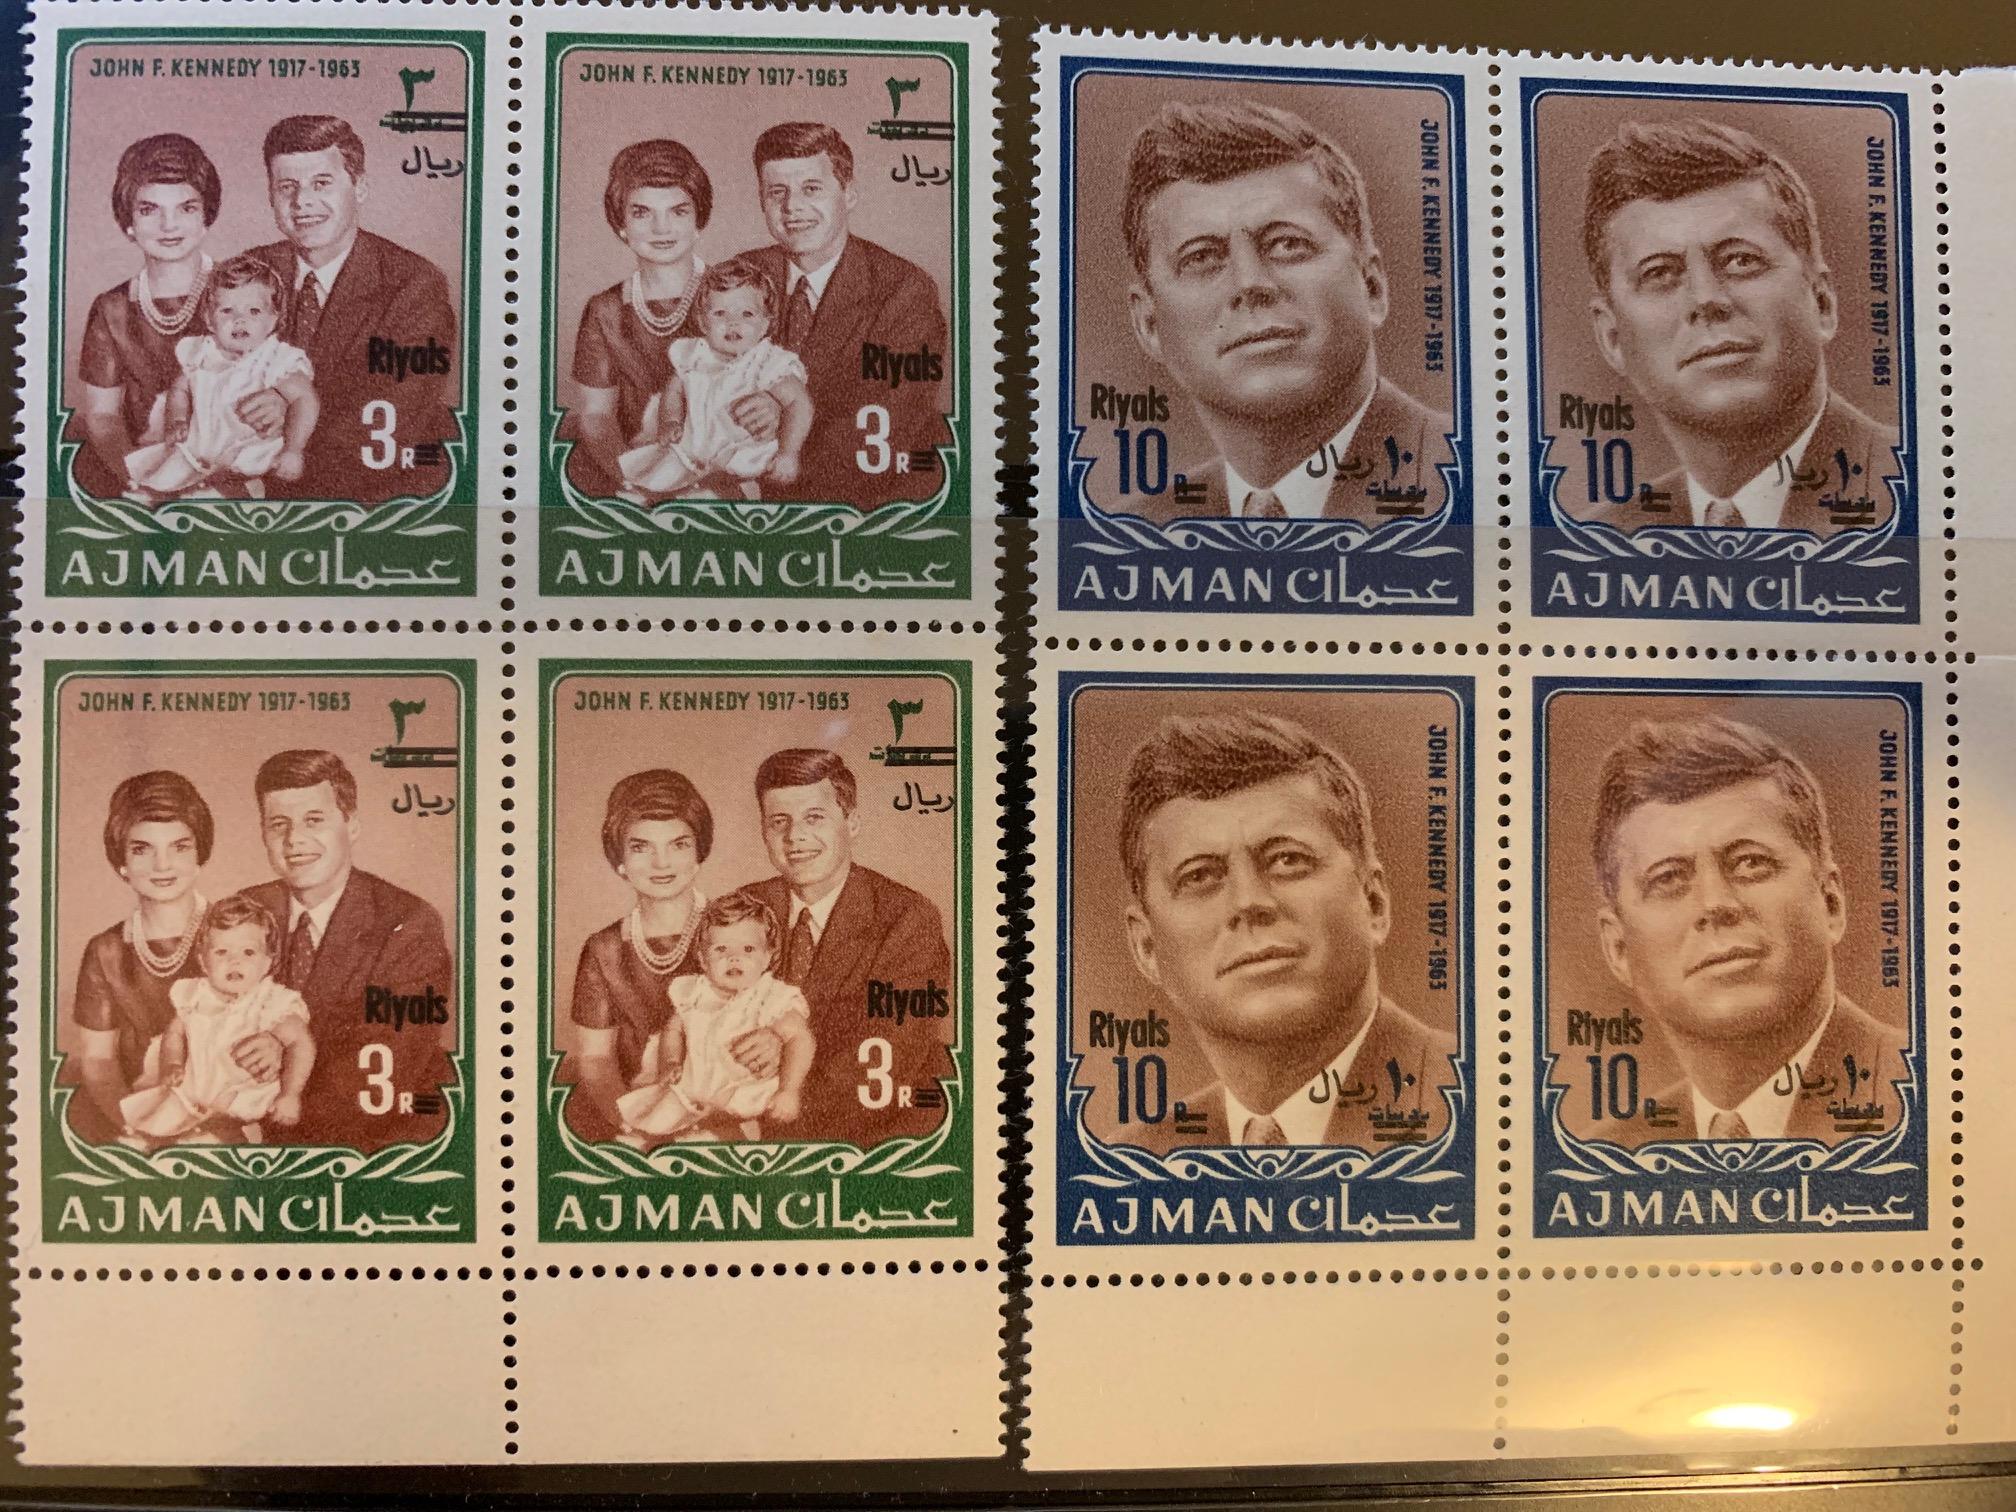 John F. Kennedy memorial stamp - 2 blocks